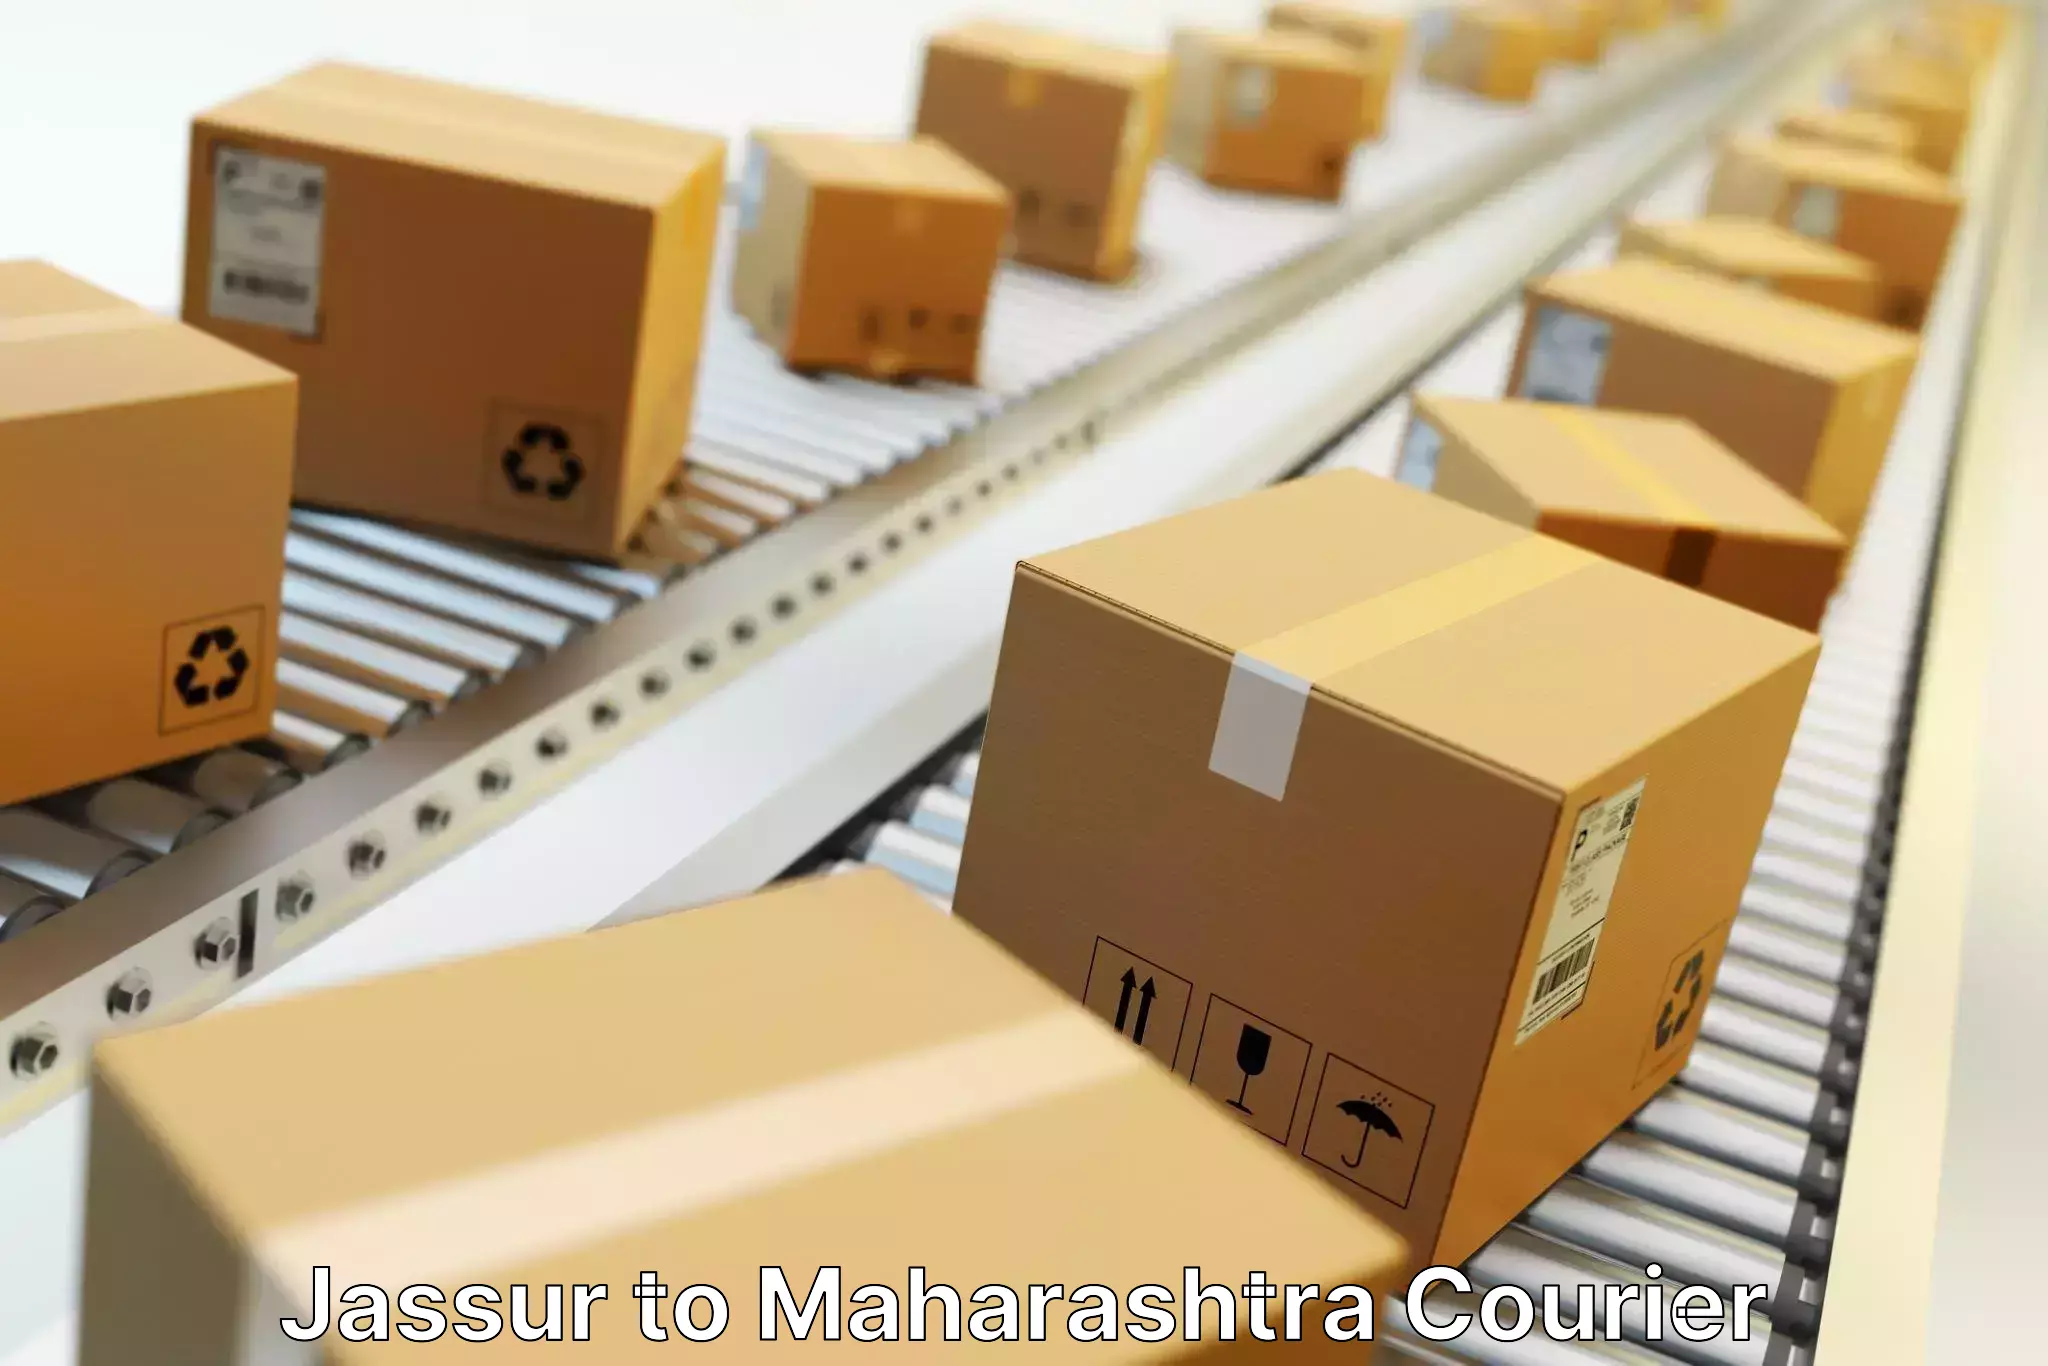 Express courier capabilities in Jassur to IIT Mumbai